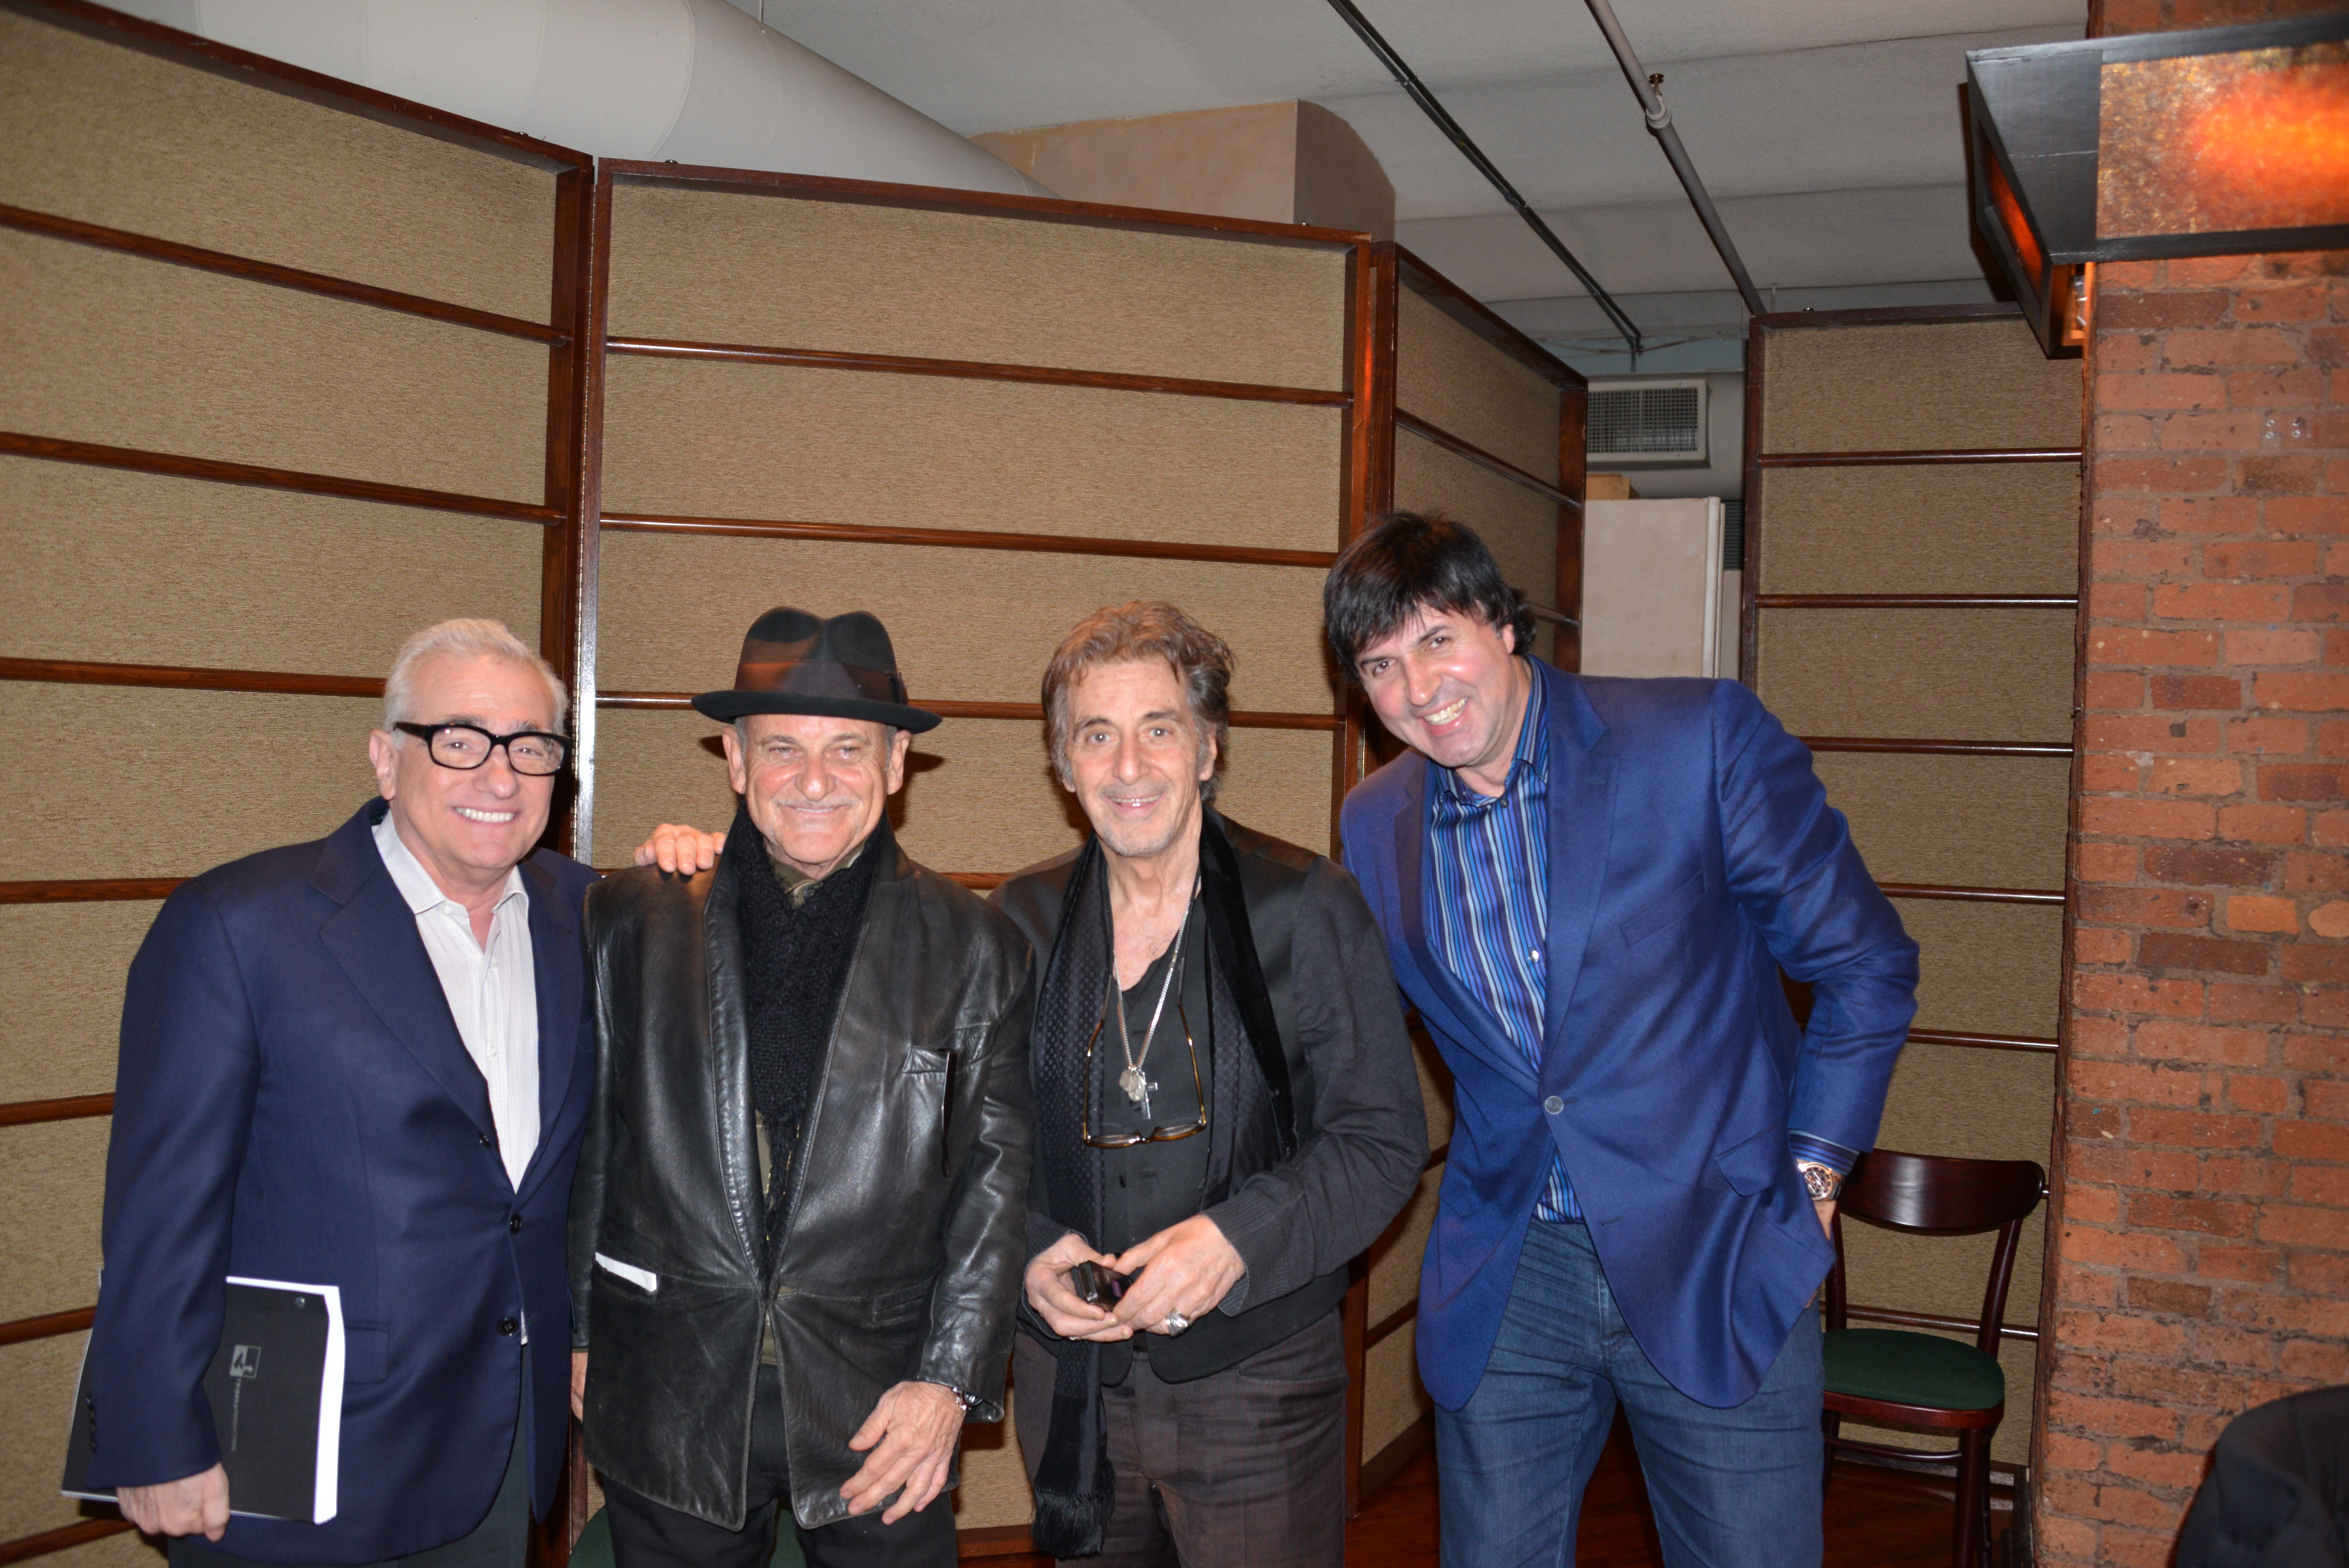 Stepan with Marty Scorcese, Al Pacino and Joe Pesci